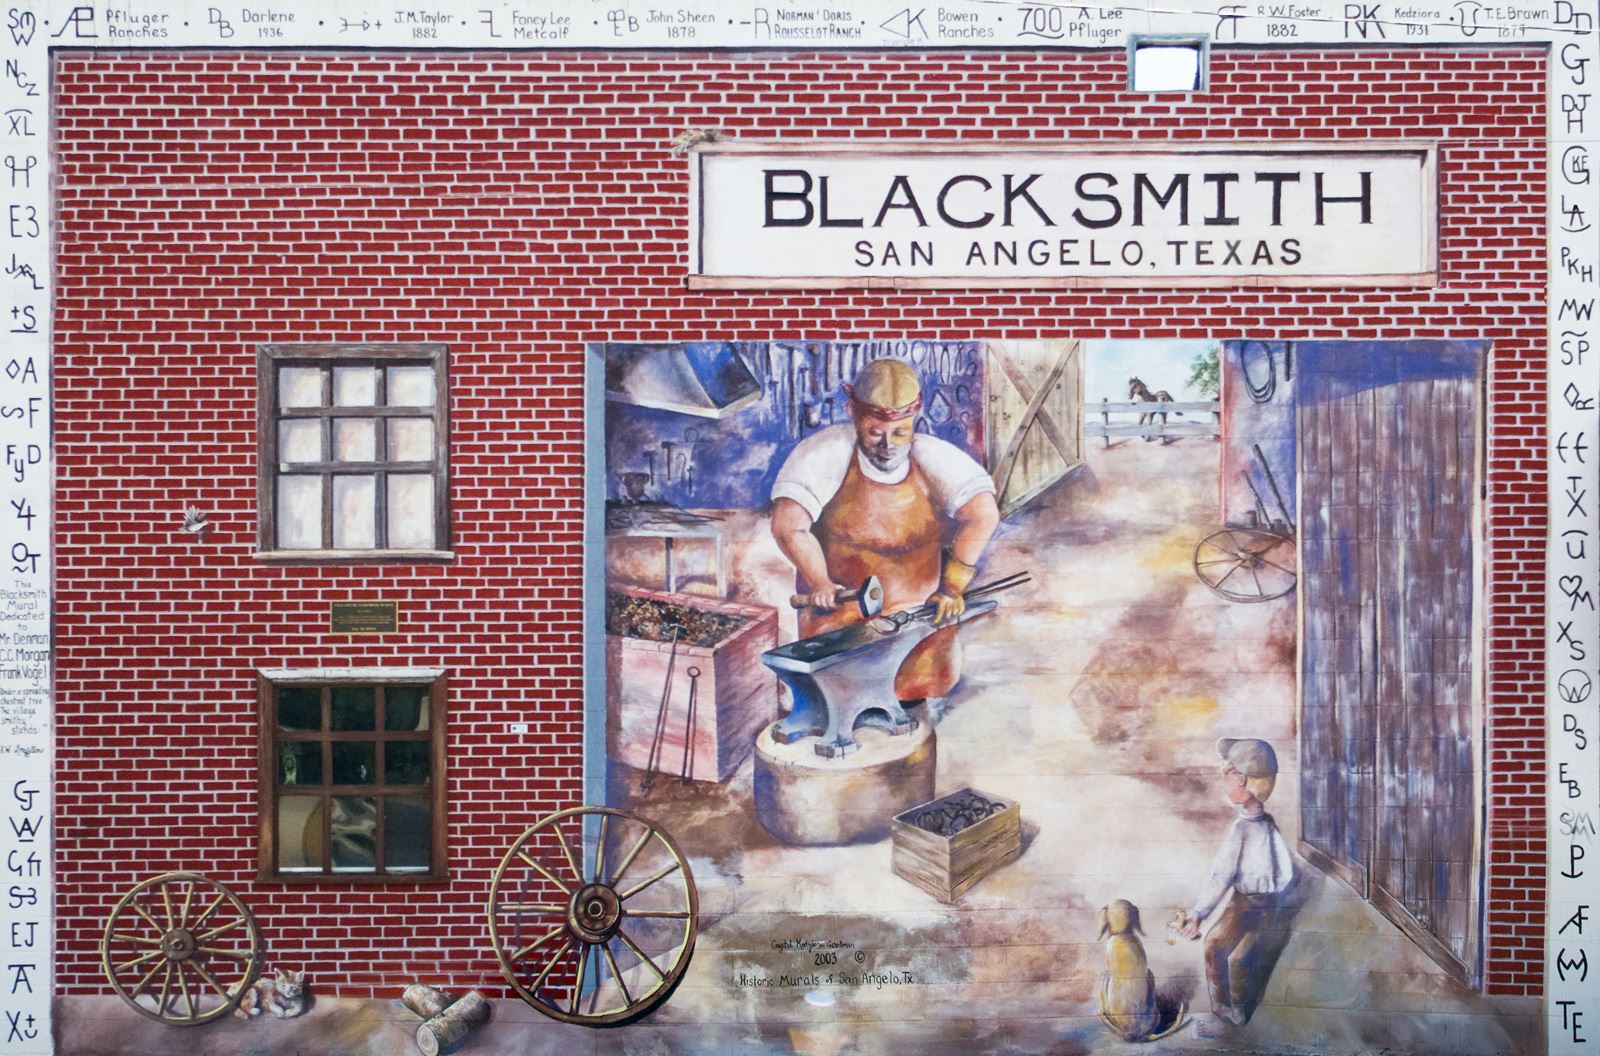 The Blacksmith Mural